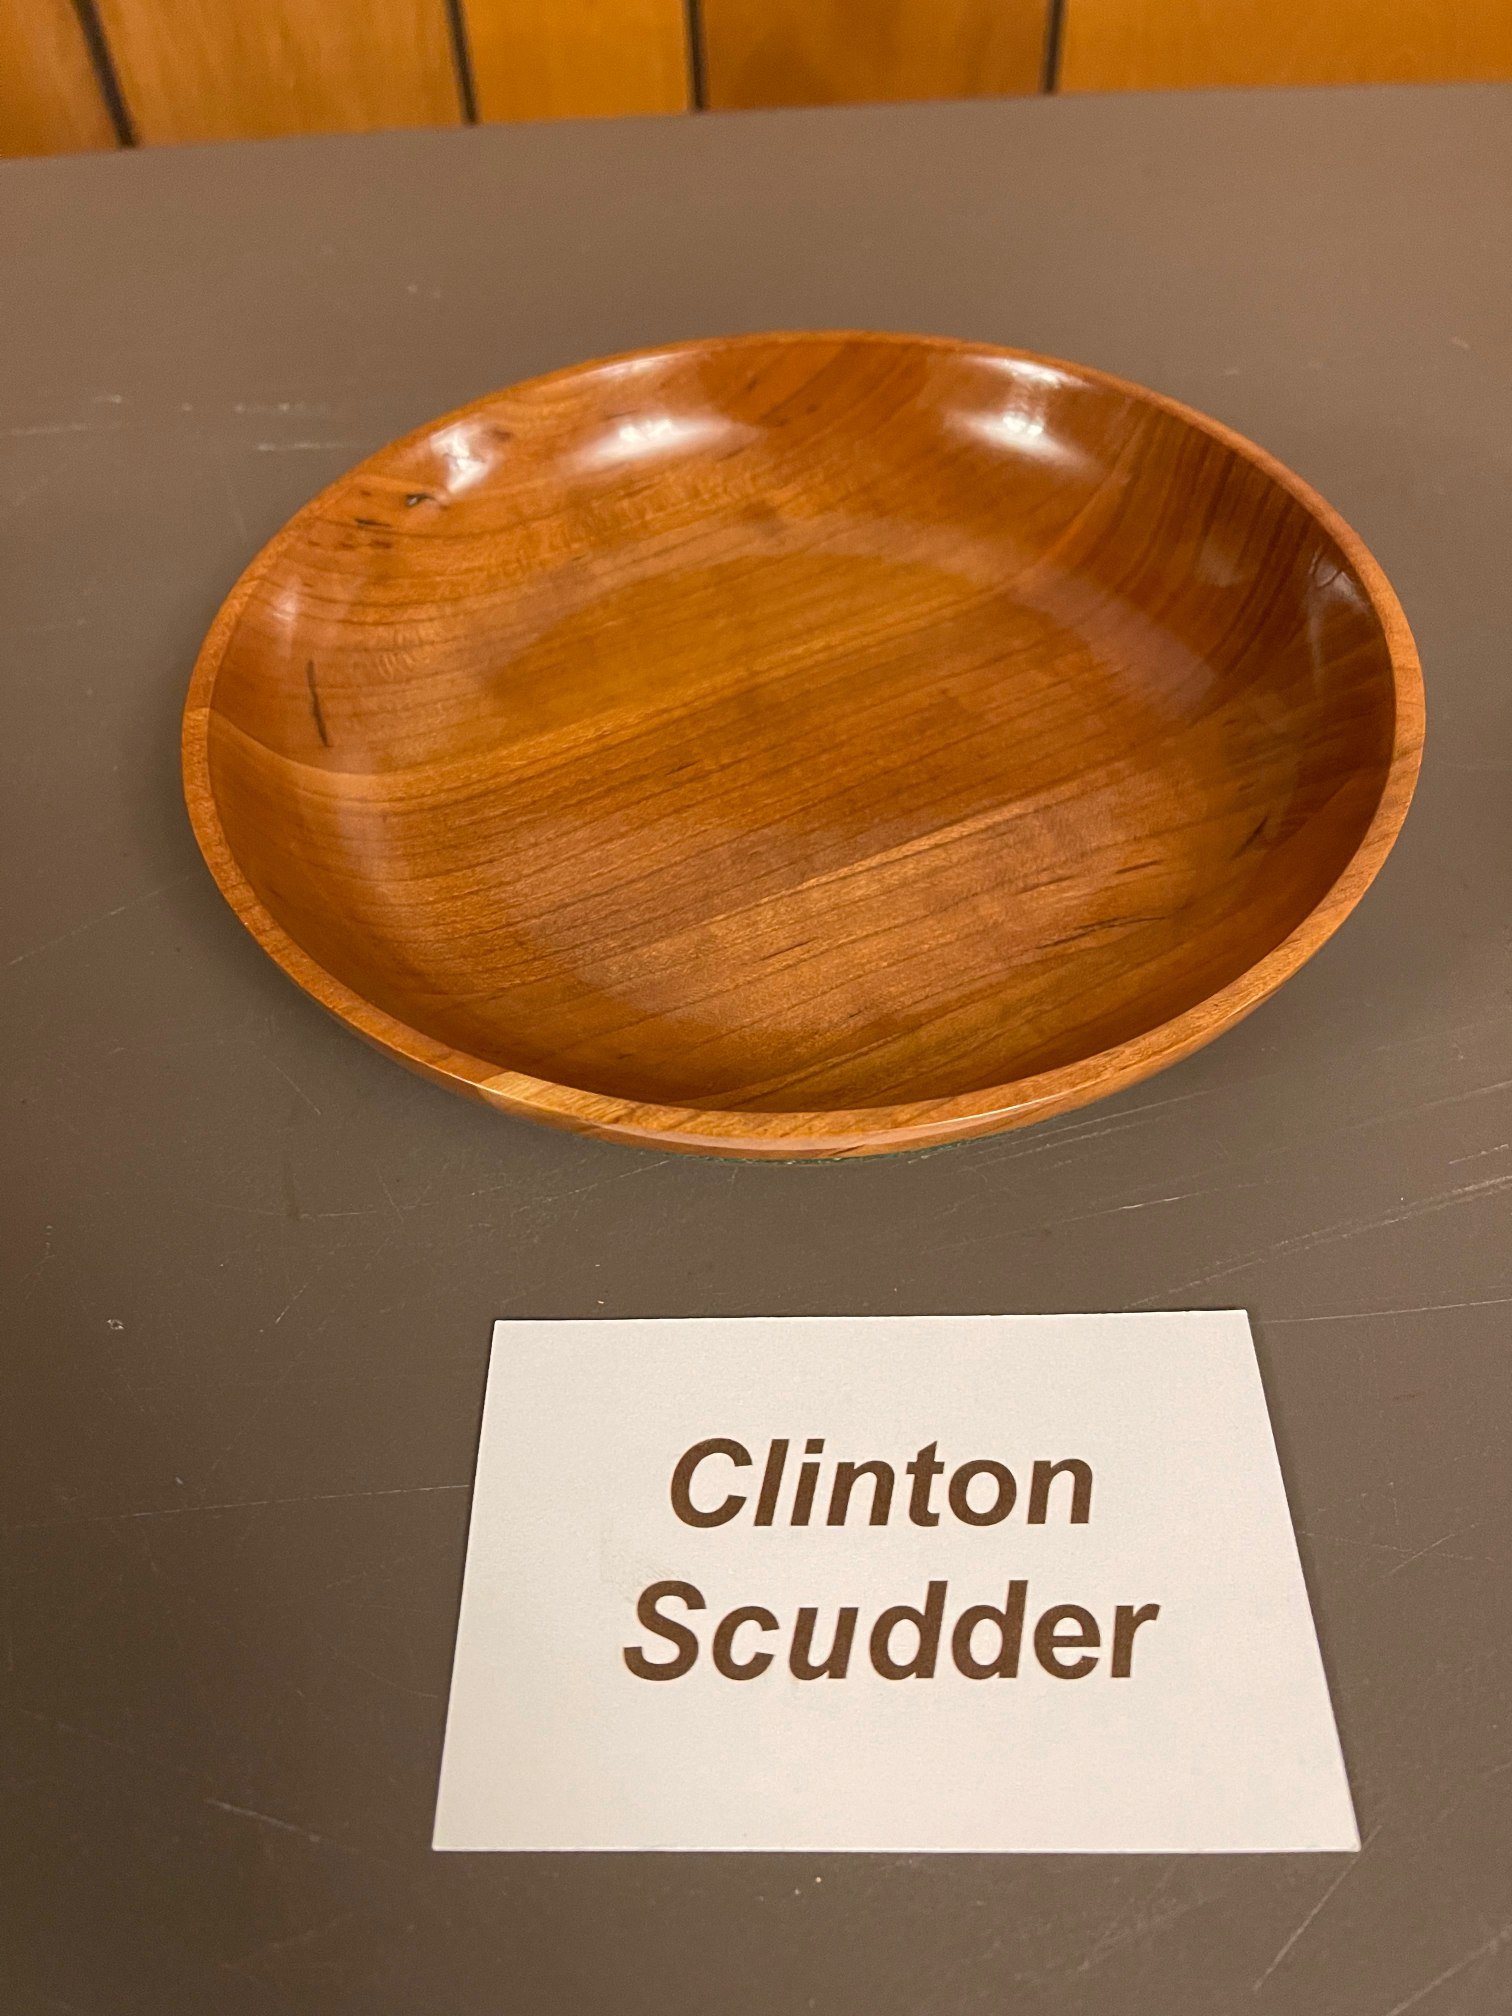 Clinton Scudder 3.jpg